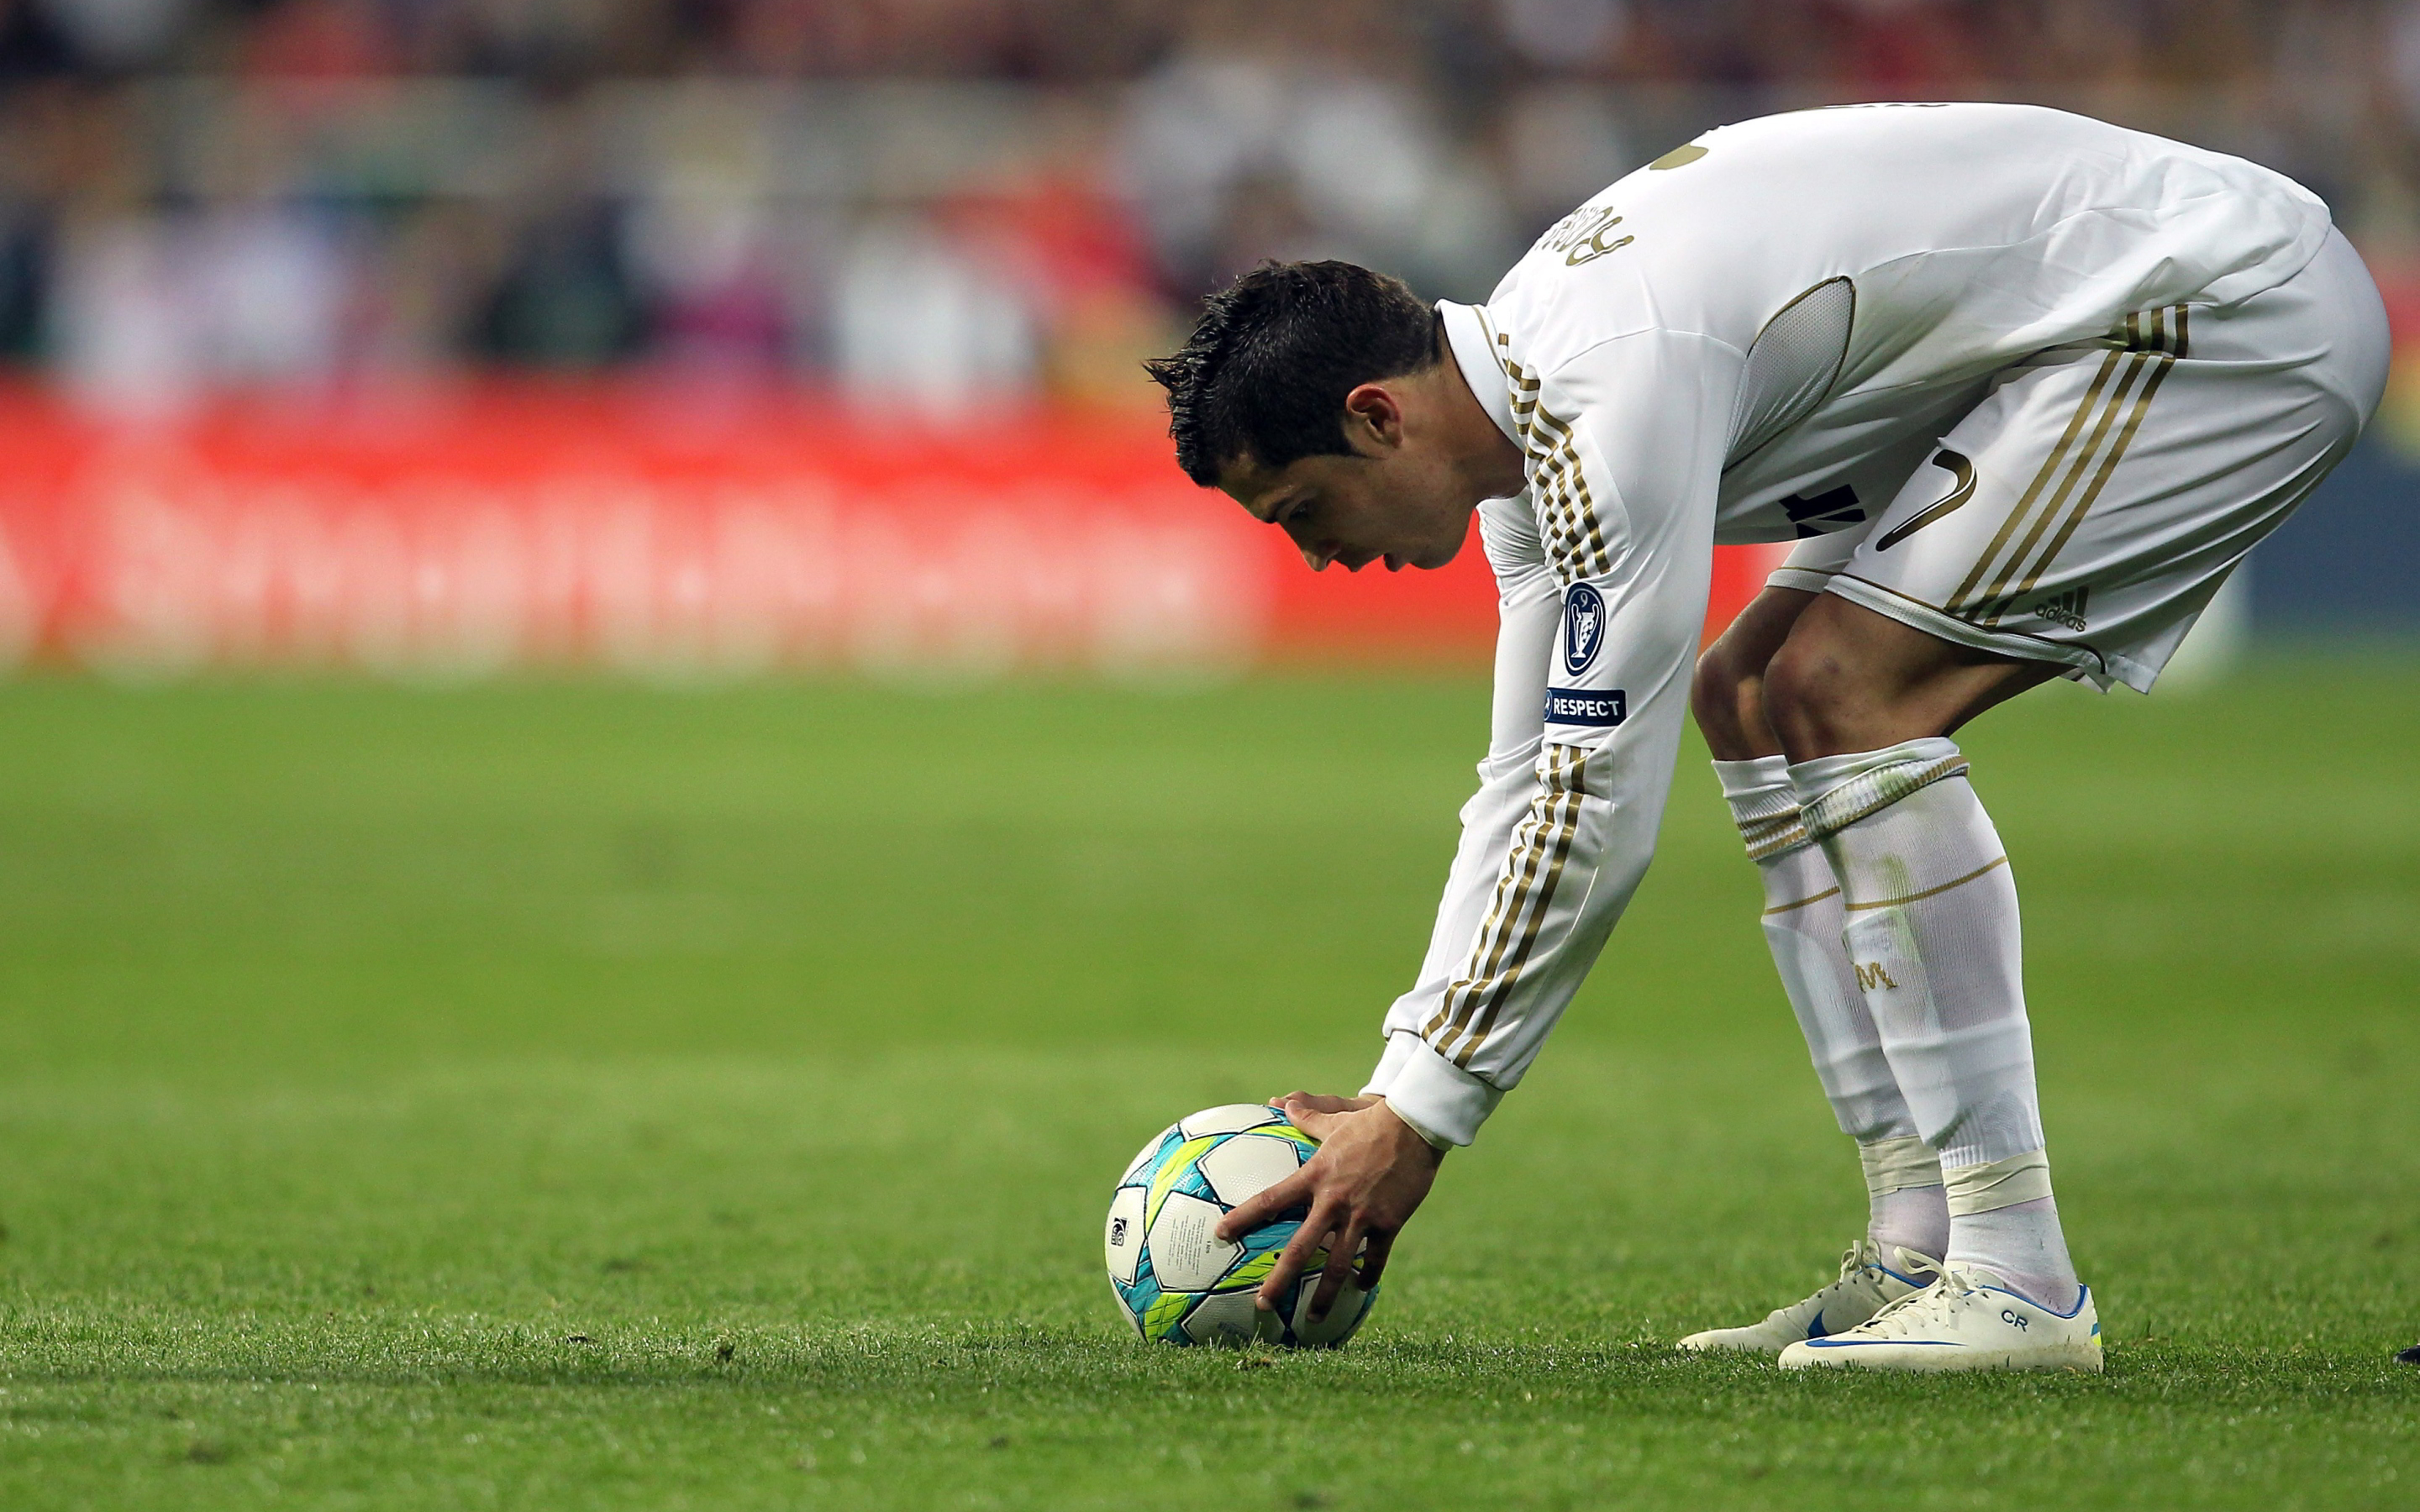 Ronaldo preparing for free kick